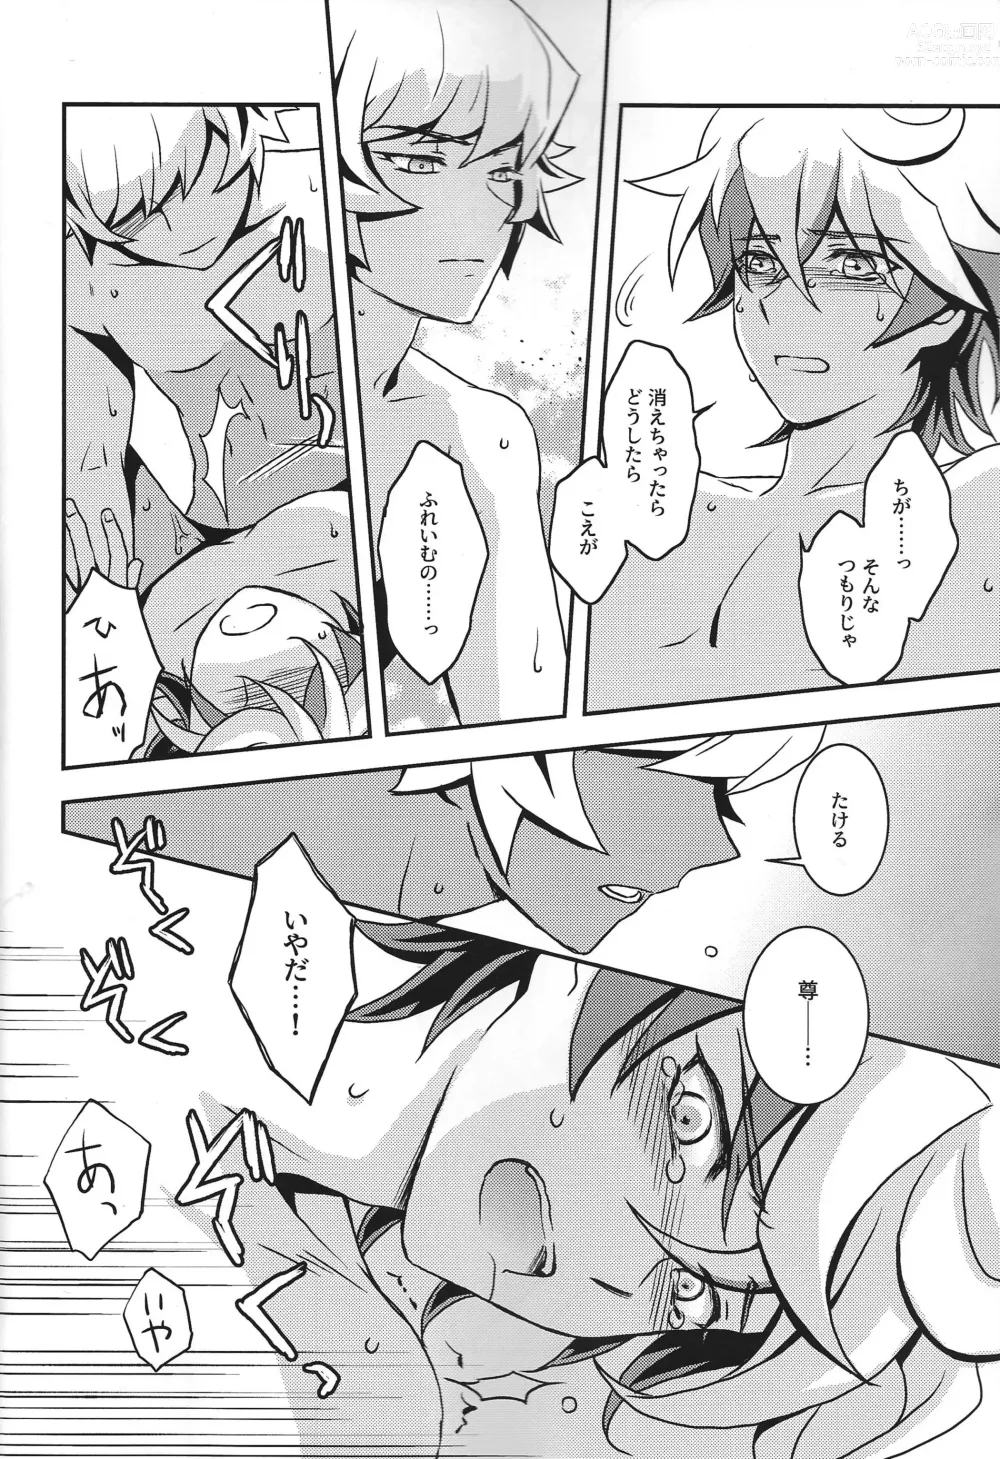 Page 23 of doujinshi Na o Yobu Koe